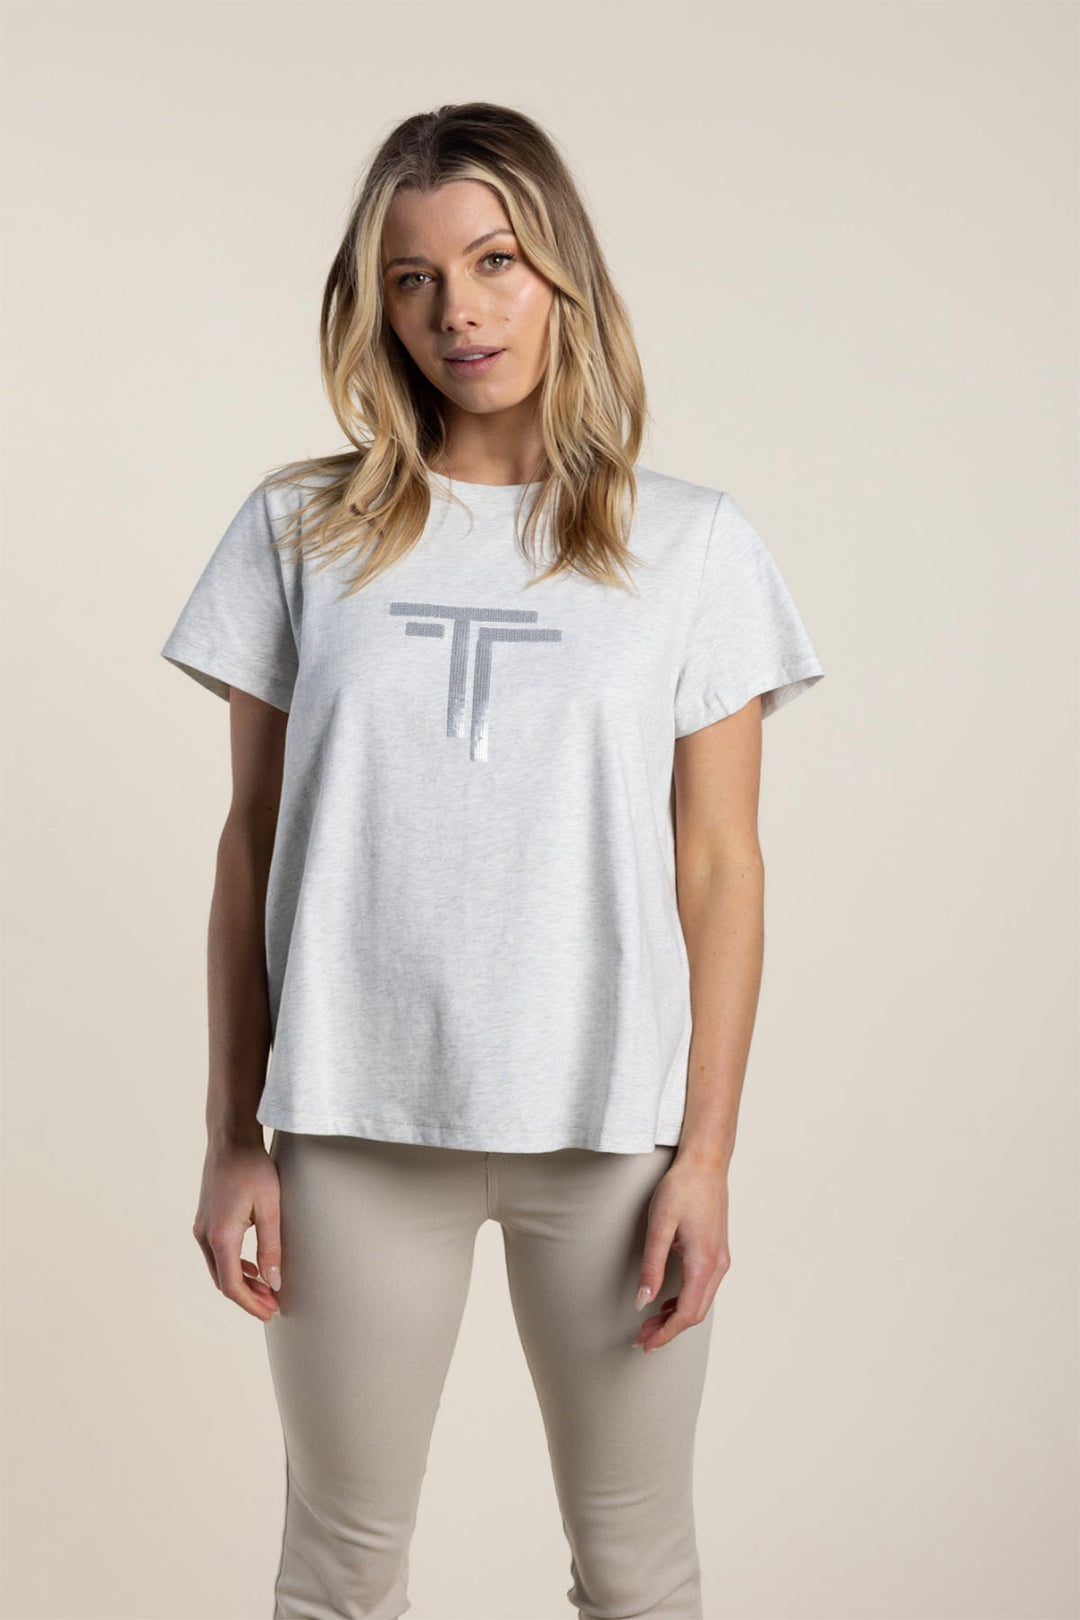 Tia T-Shirt - Grey Marle - TT1